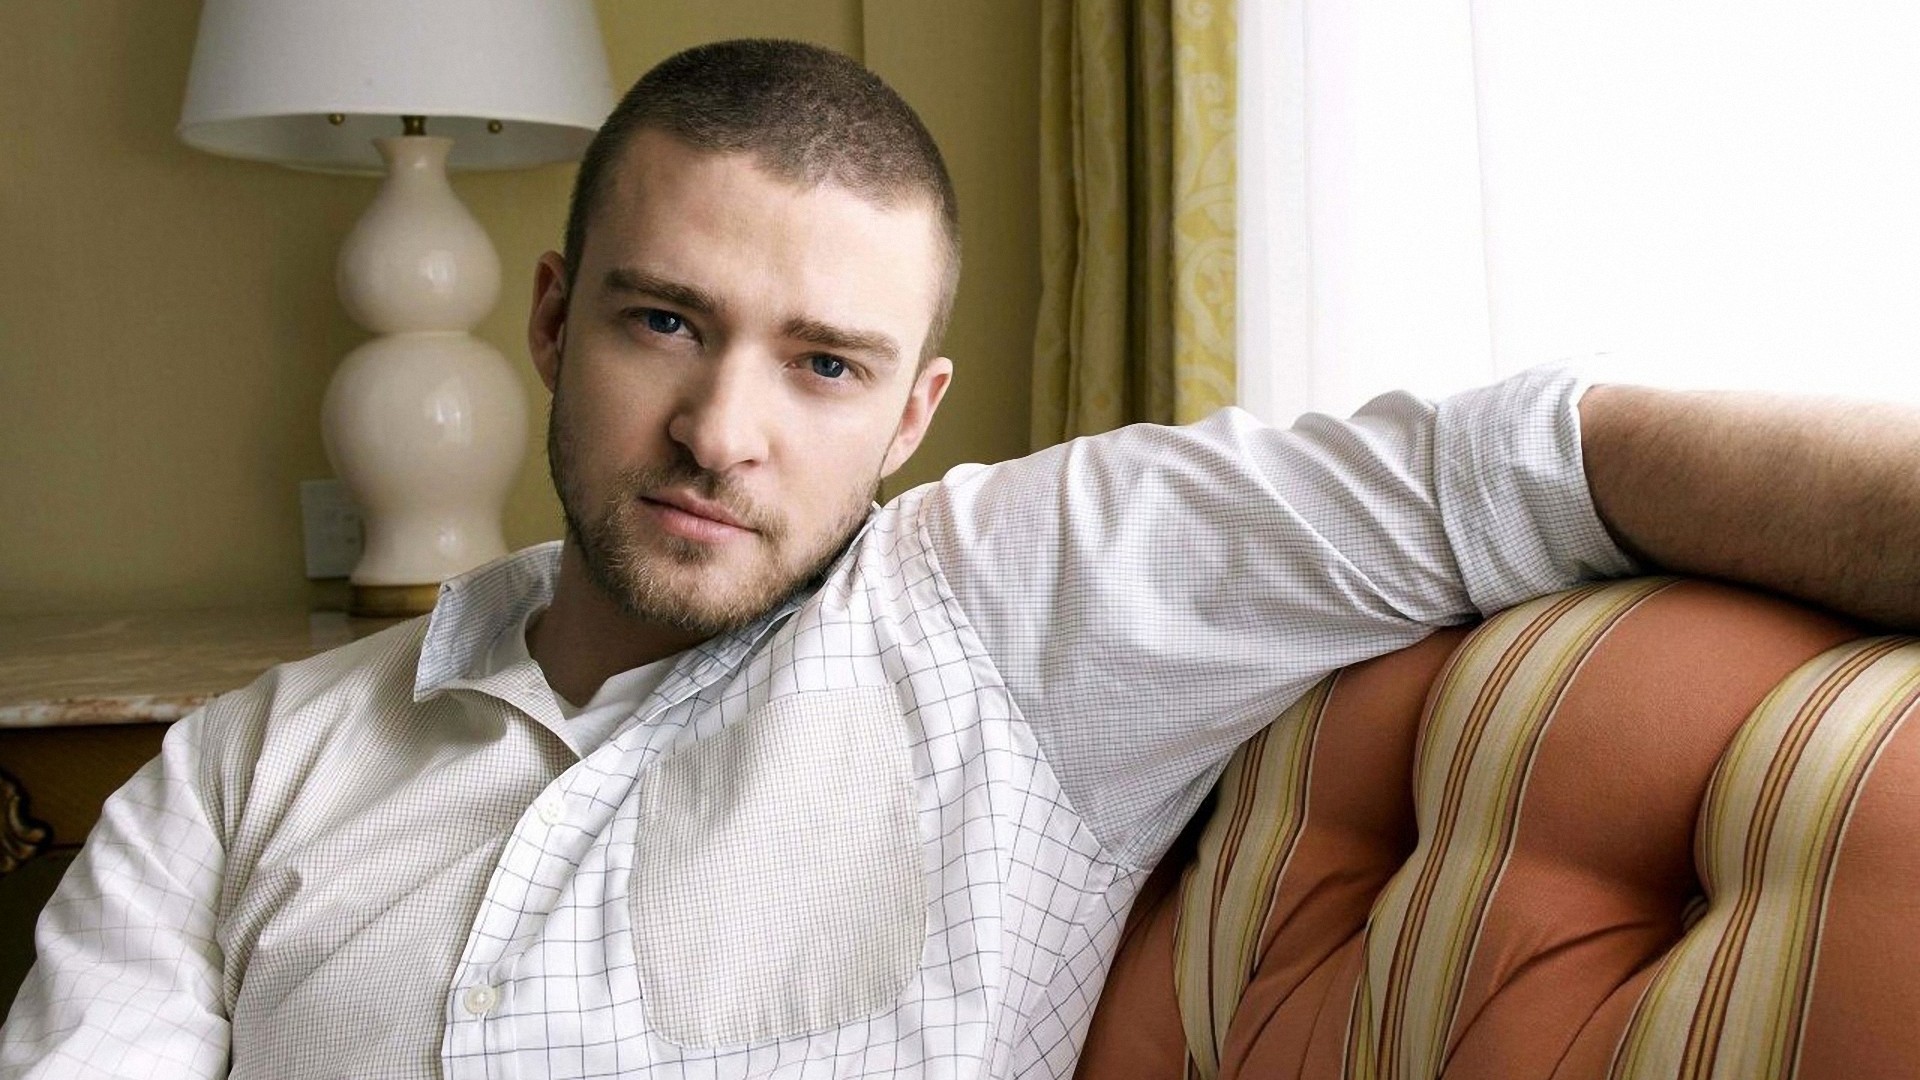 Justin Timberlake Nude Gallery